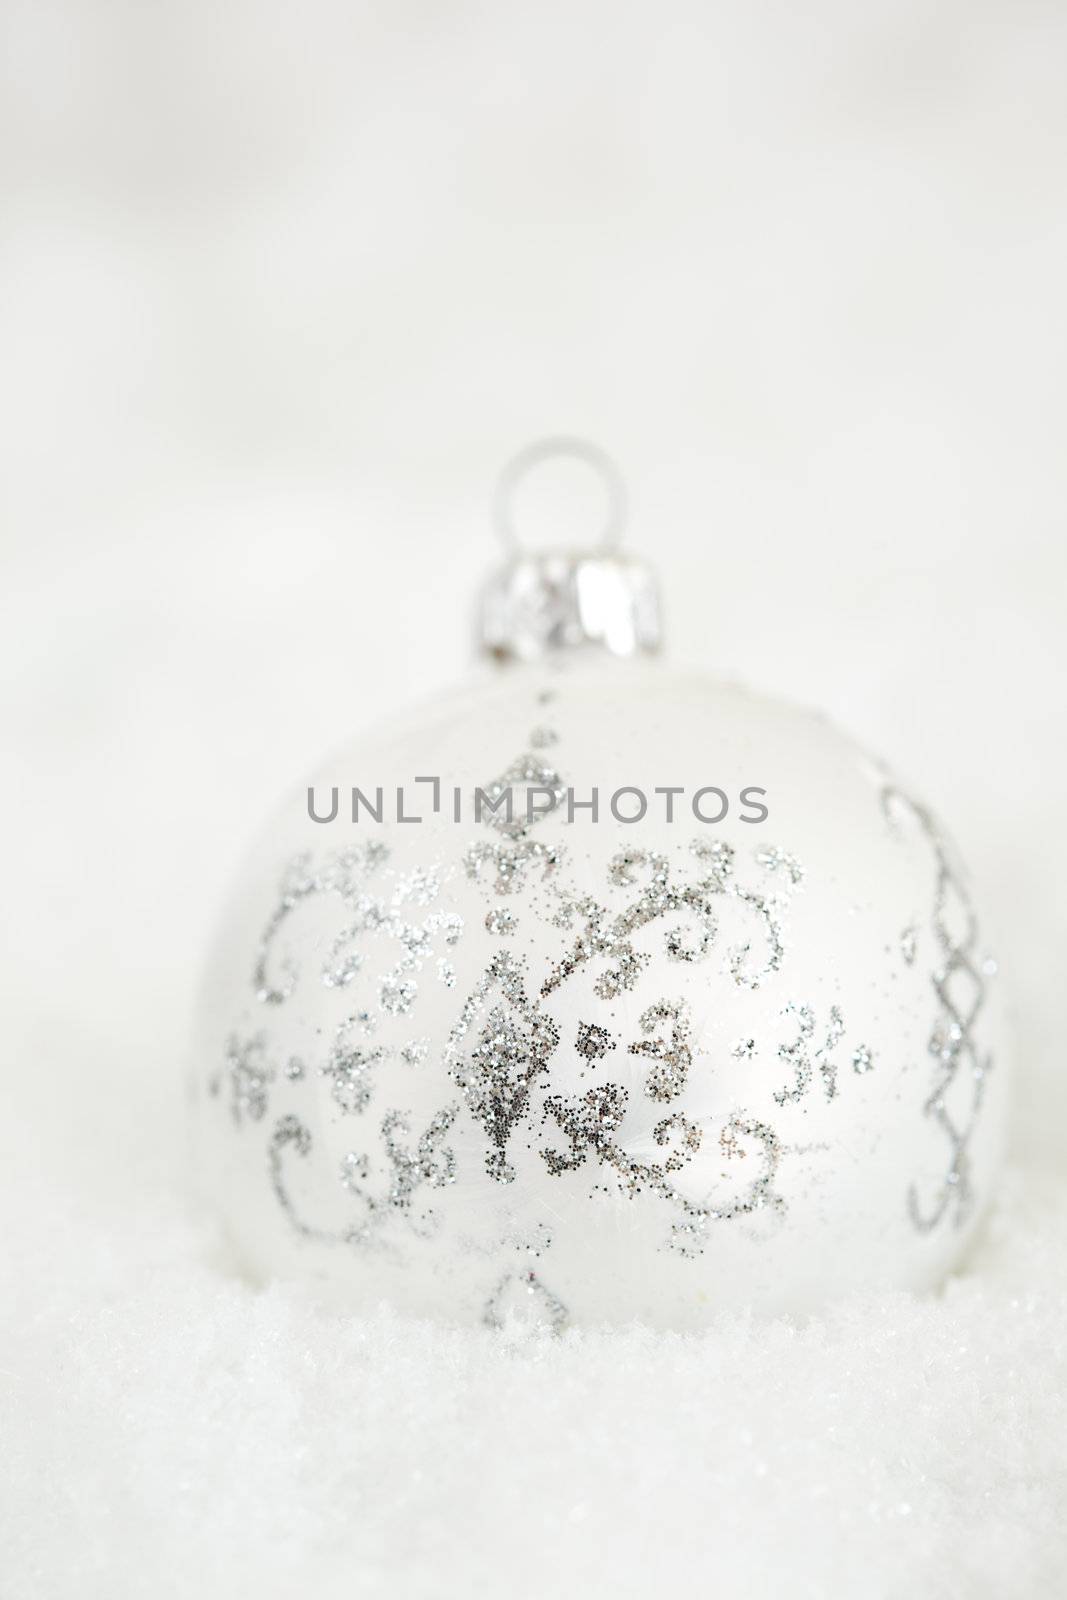 Soft winterscene by Fotosmurf